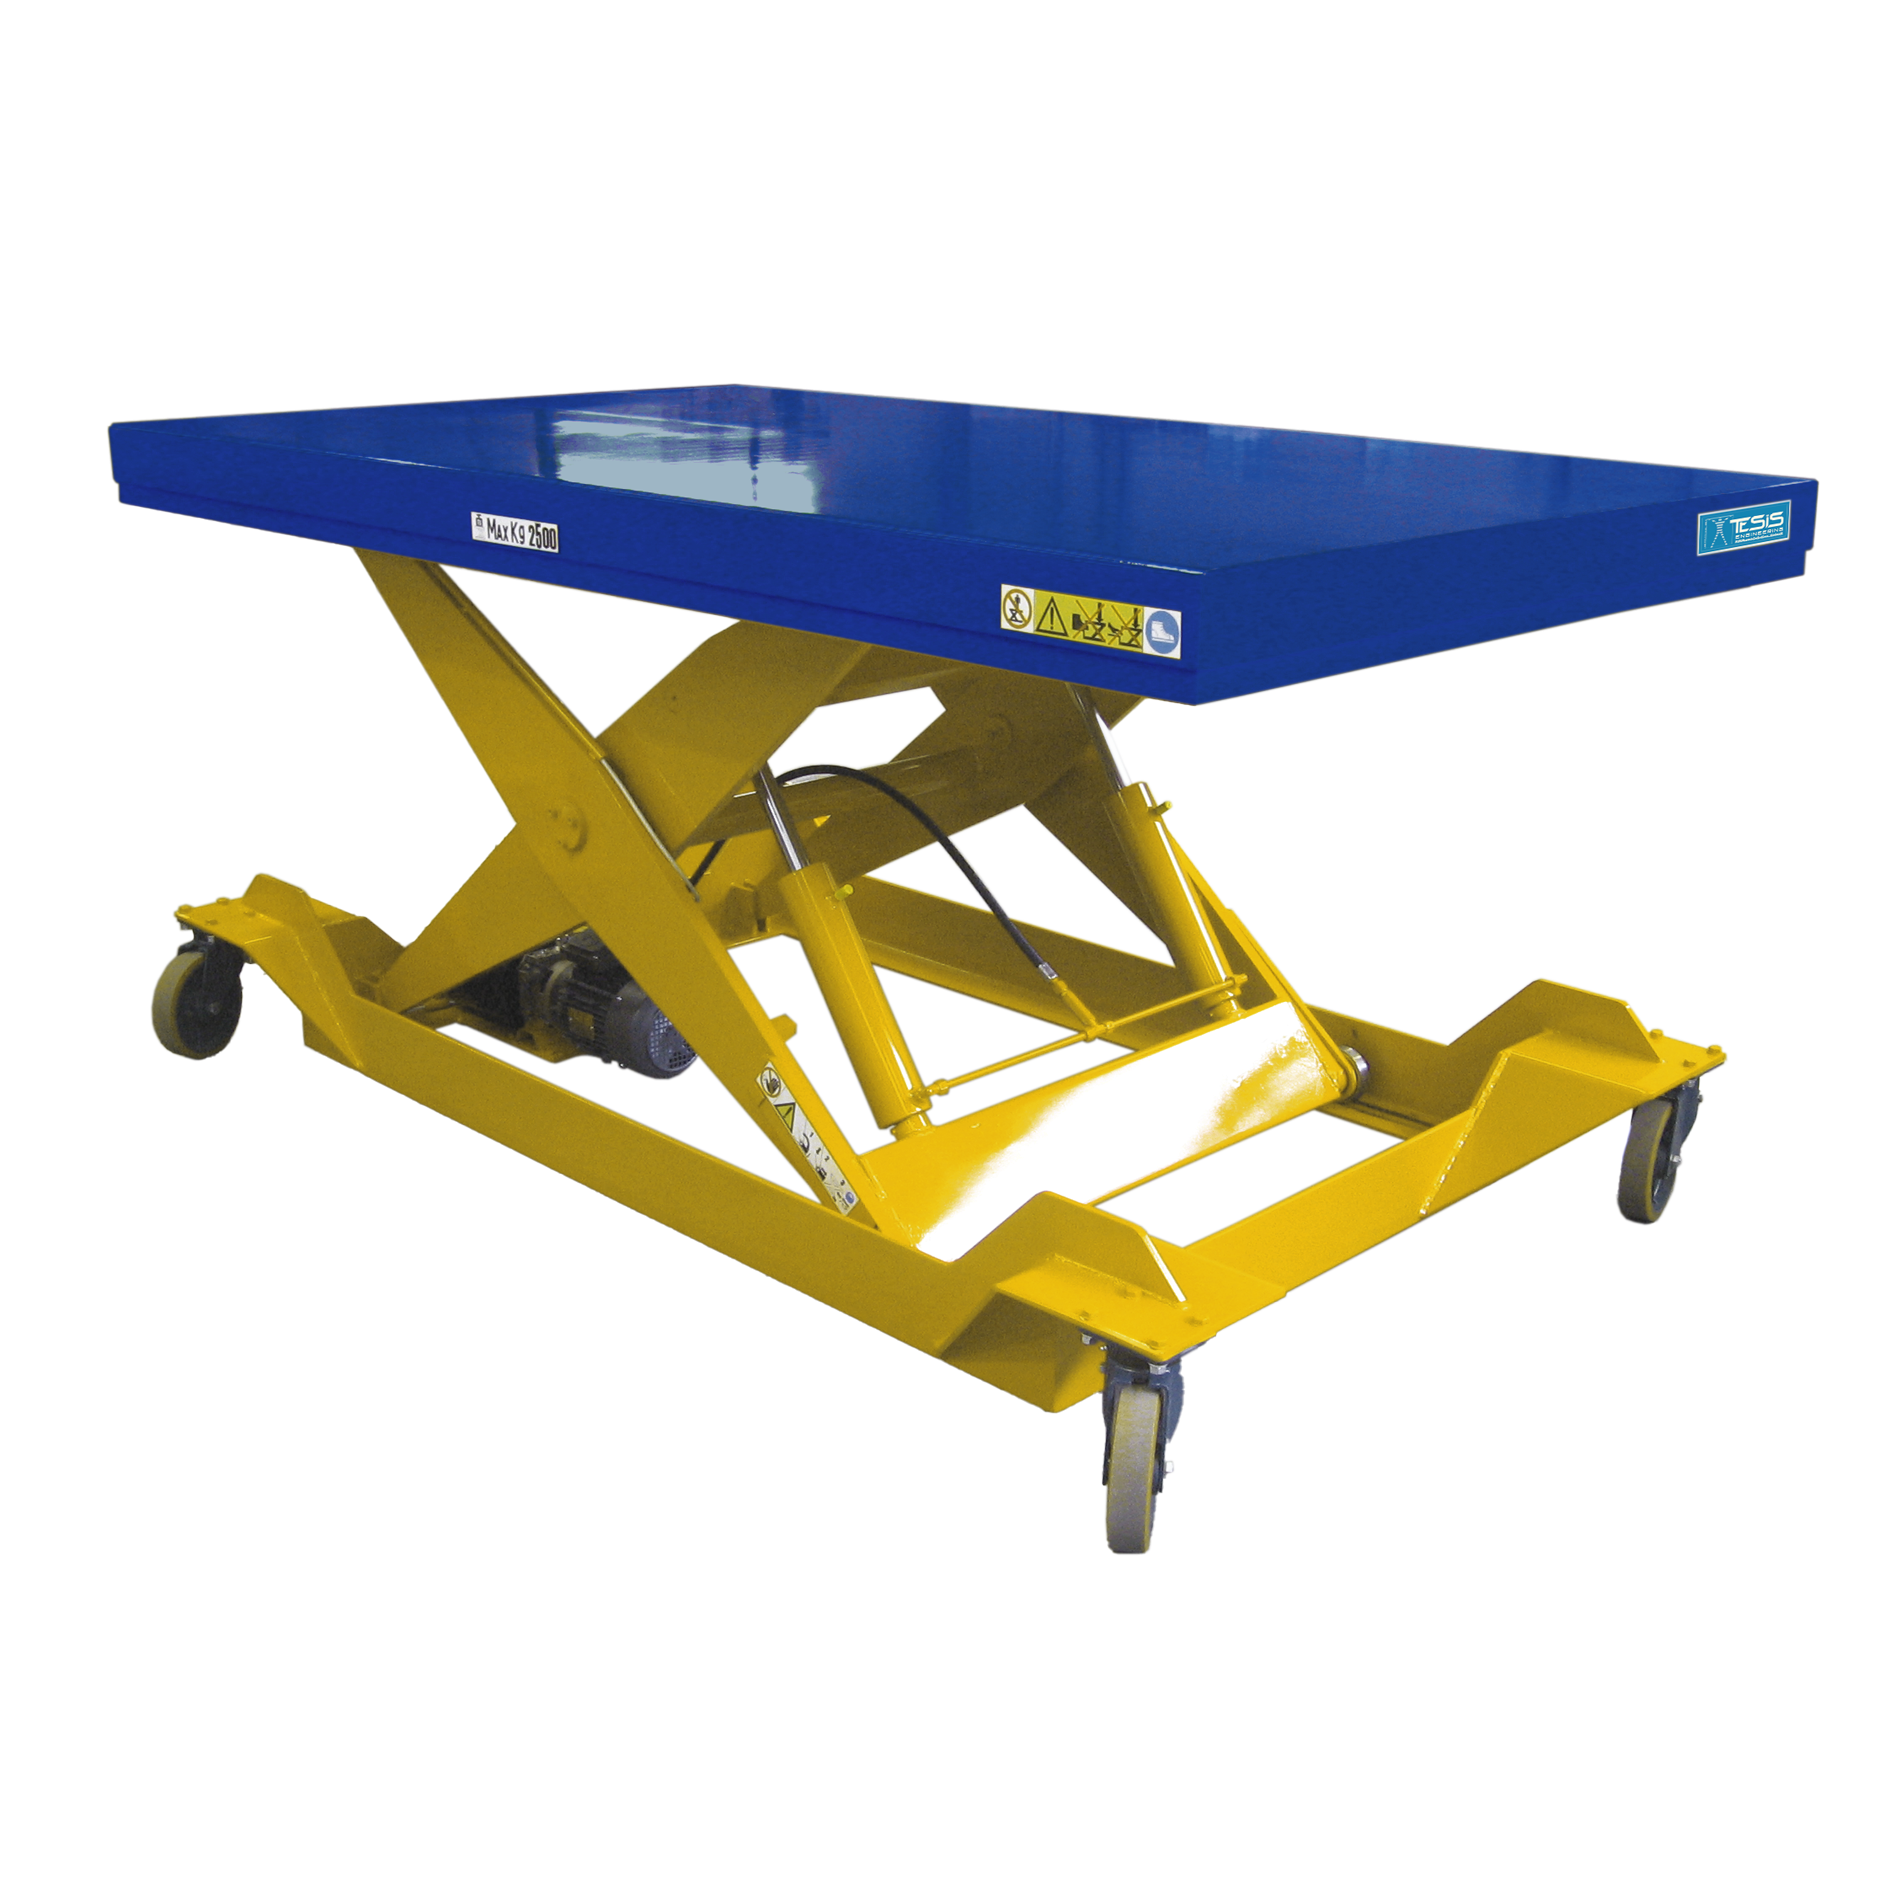 Mobile hydraulic lifting table on pivoting wheels - Mobile scissor lifting platforms - Portable scissor lifts - scissor lift cart - mobile lift tables